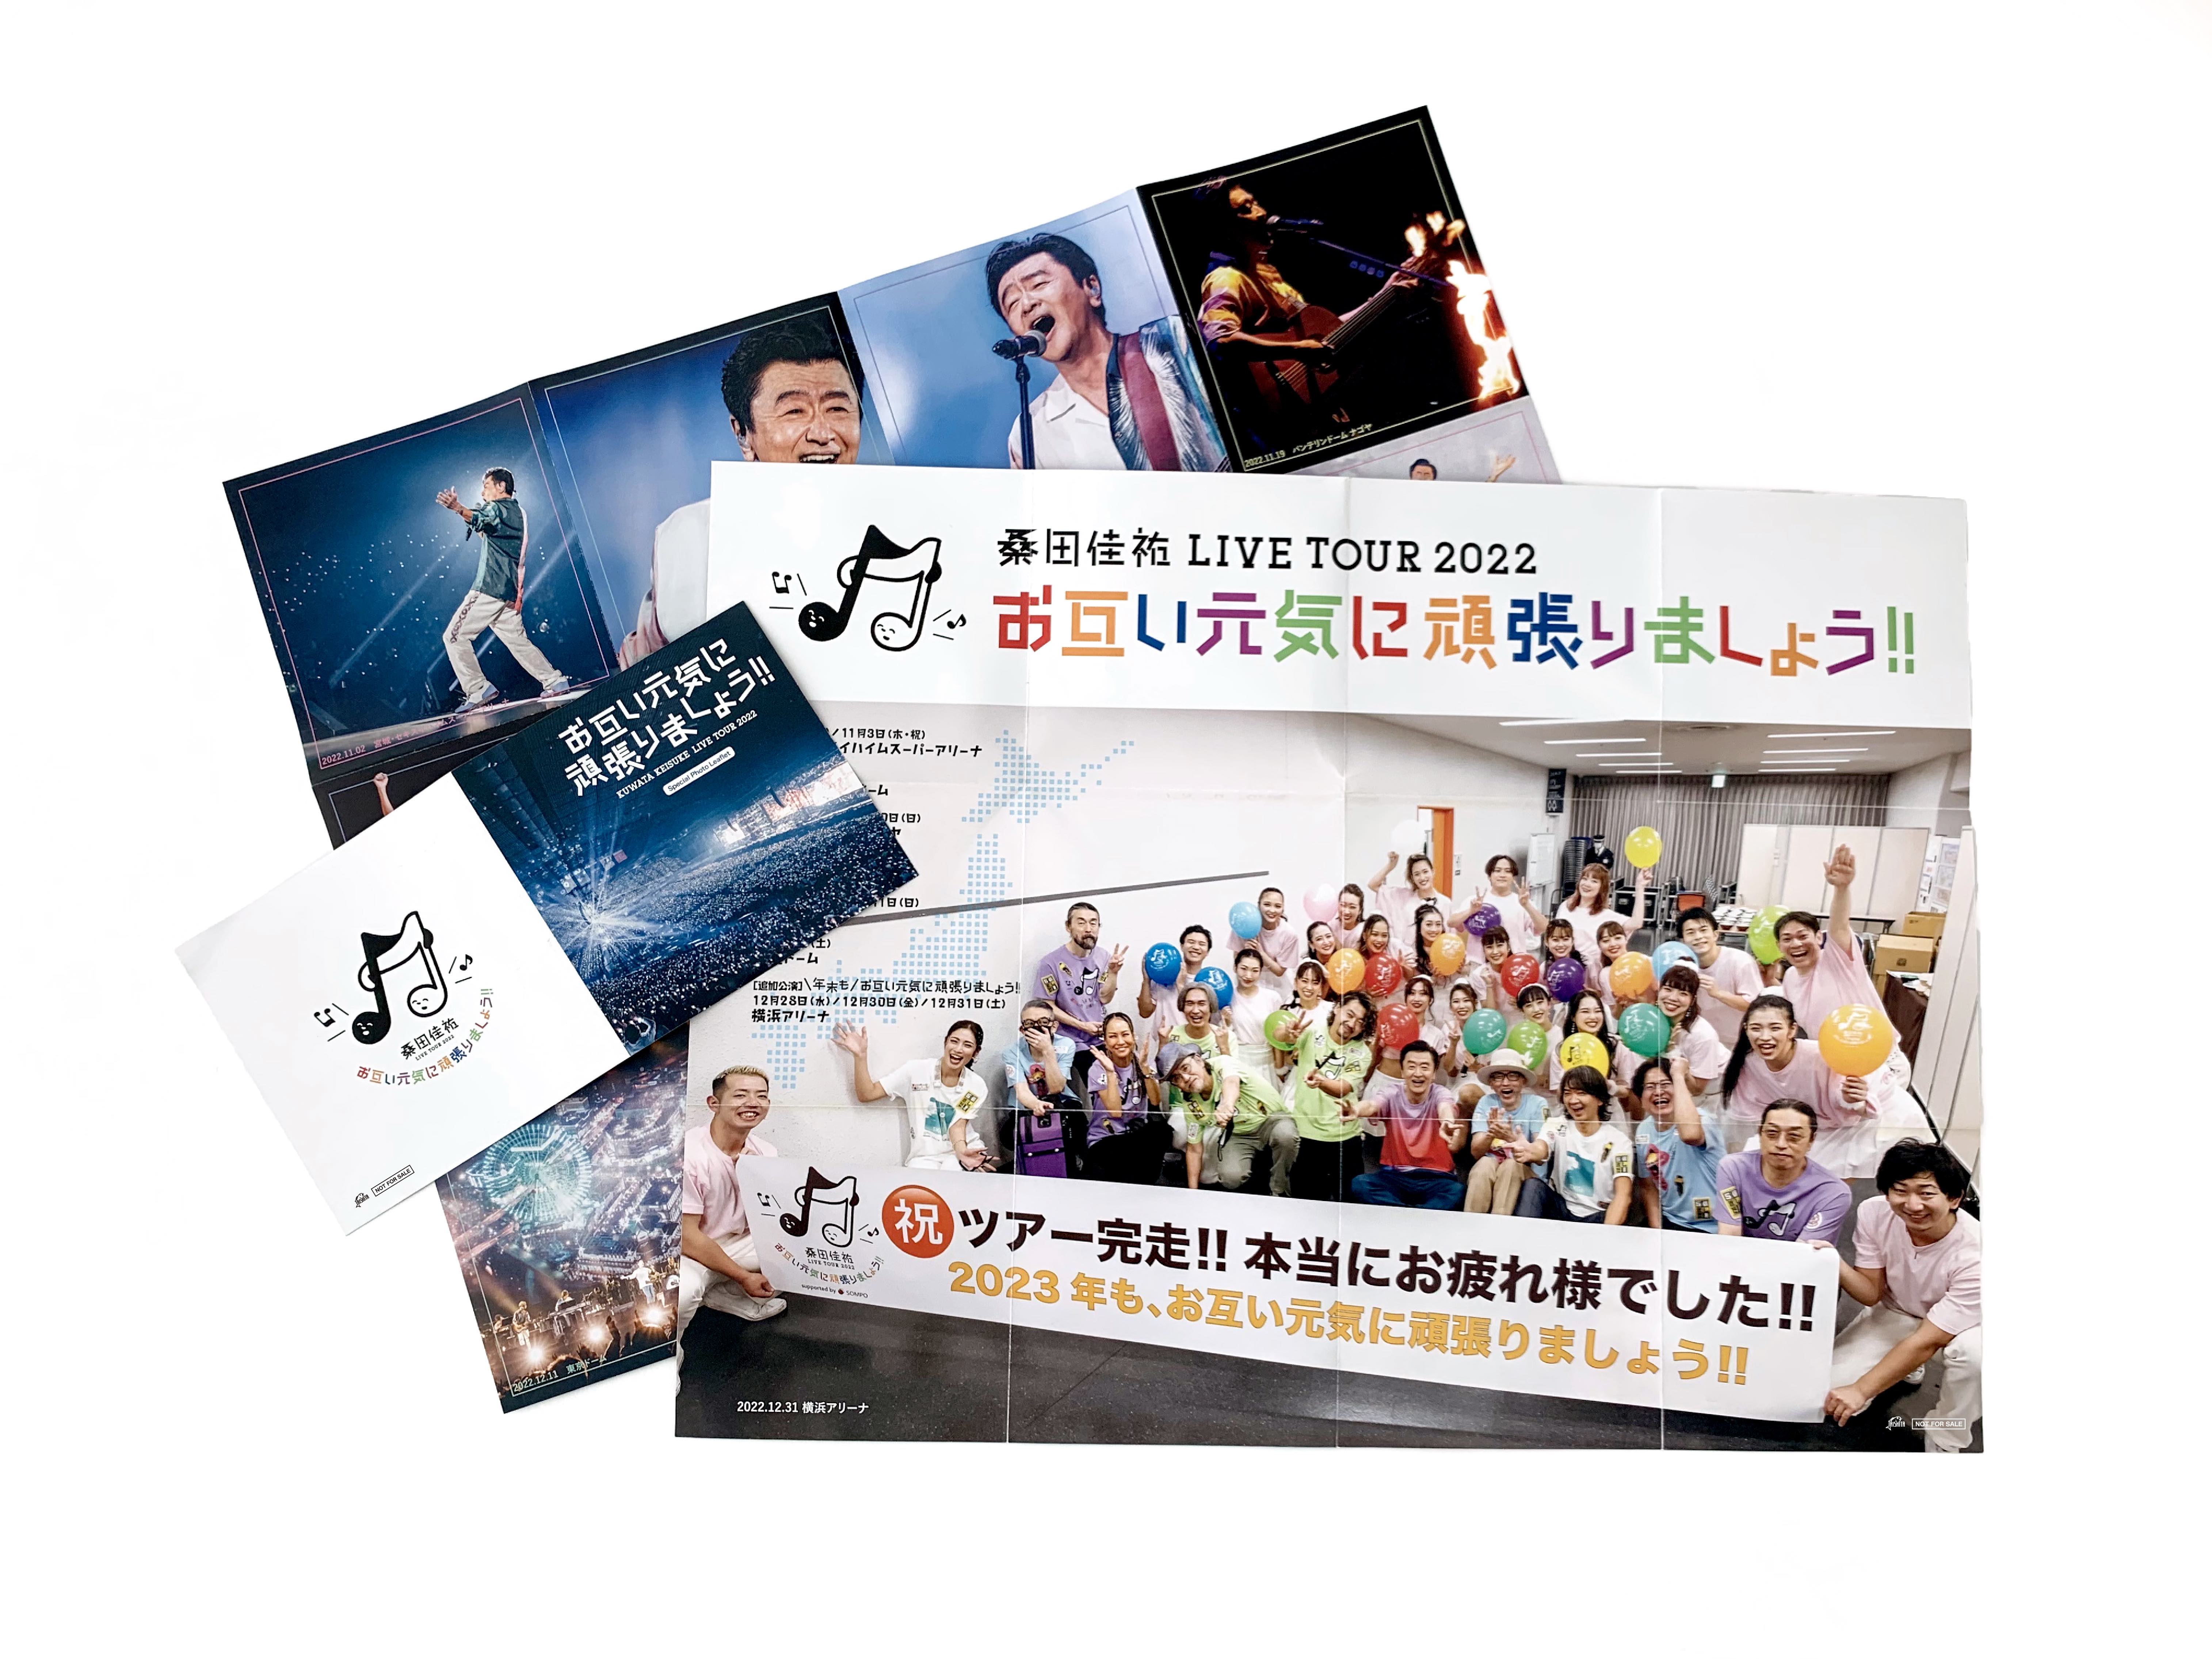 LIVE Blu-ray『お互い元気に頑張りましょう!! -Live at TOKYO DOME 